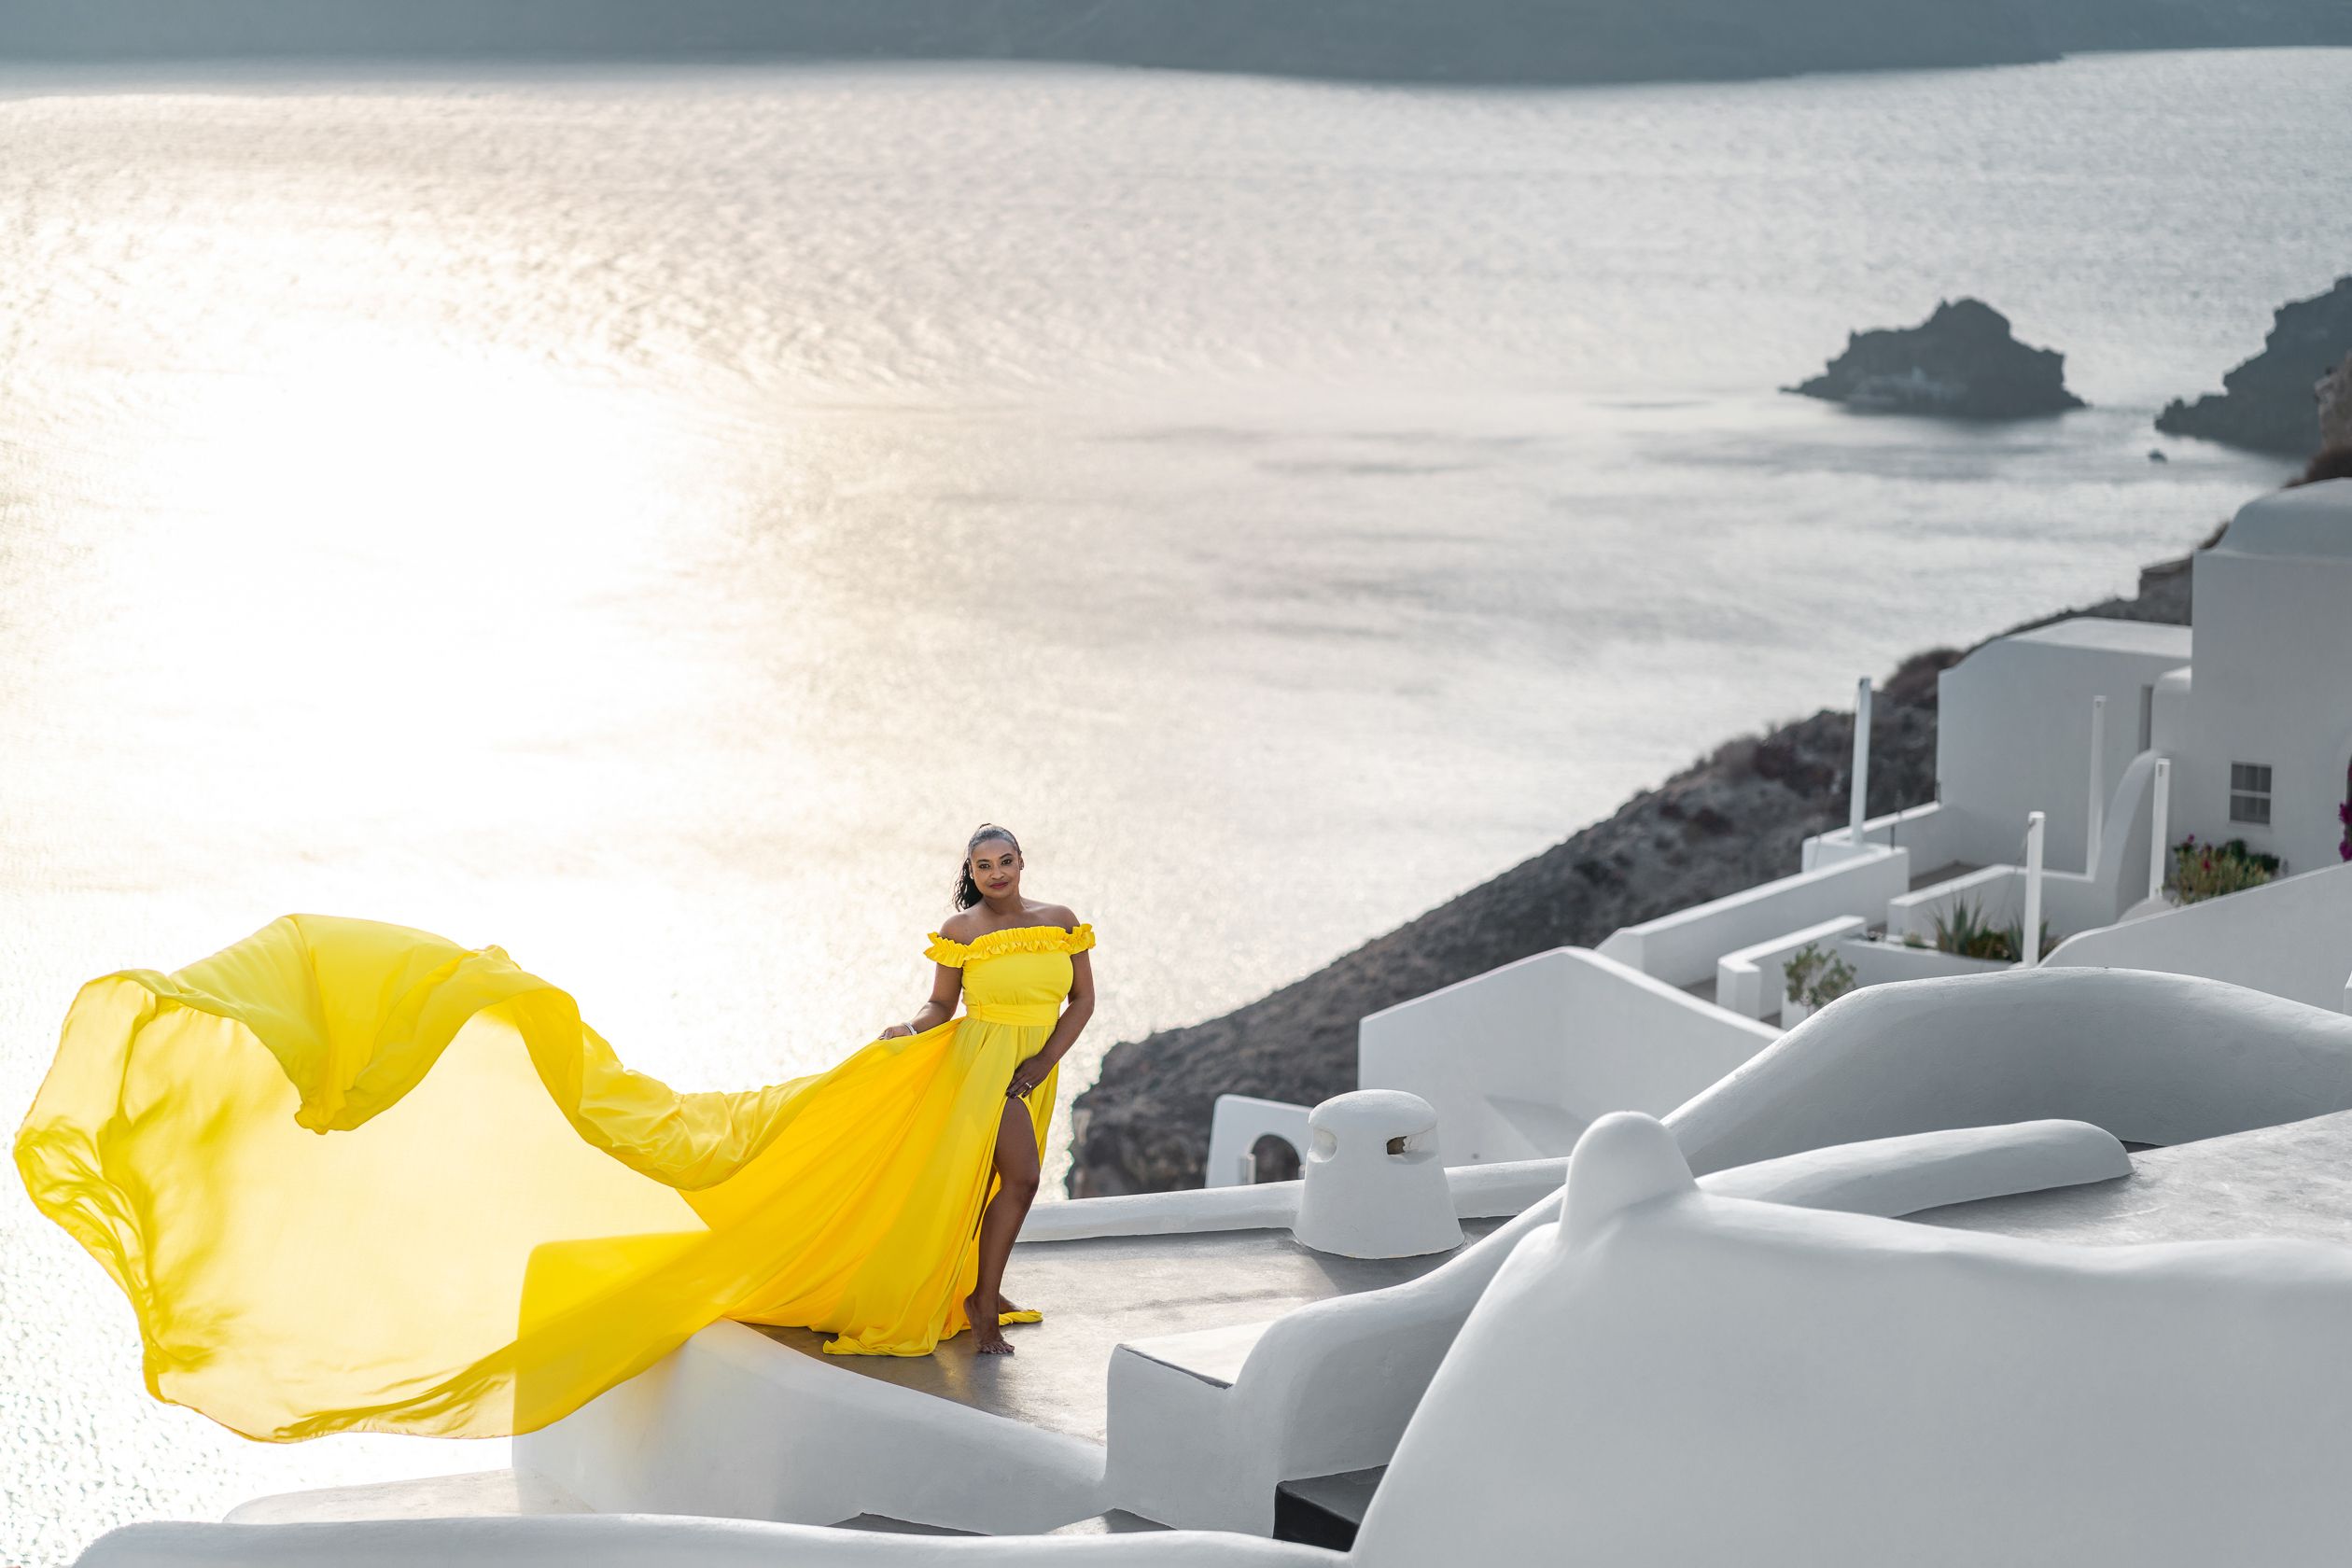 Santorini dress shoot in Oia